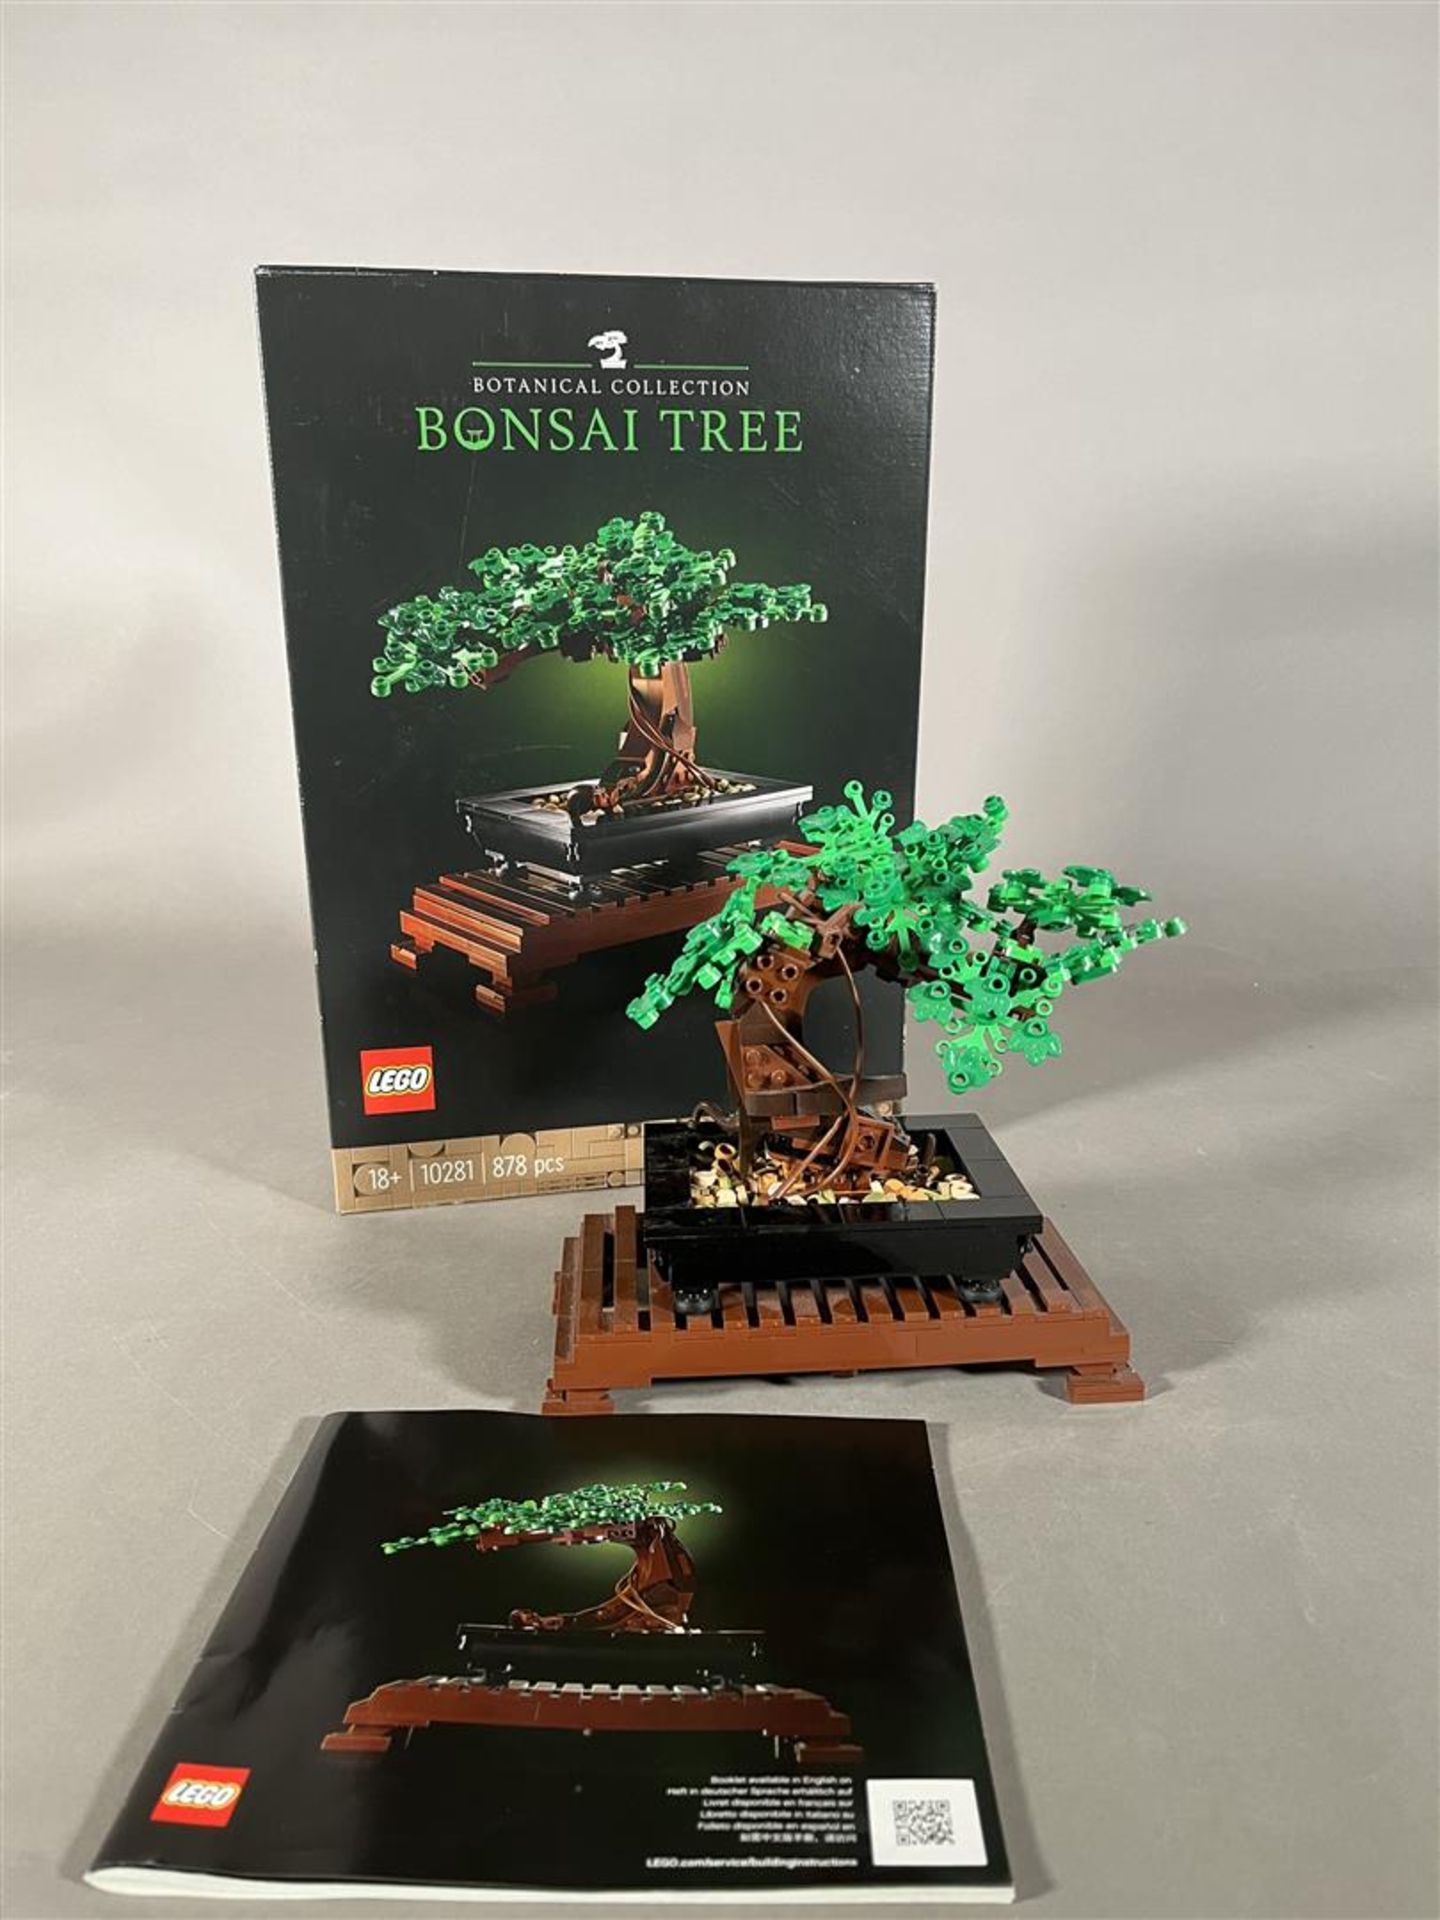 Lego - Creator Expert - 10281 - Bonsai tree - MISB - 2000 - present.